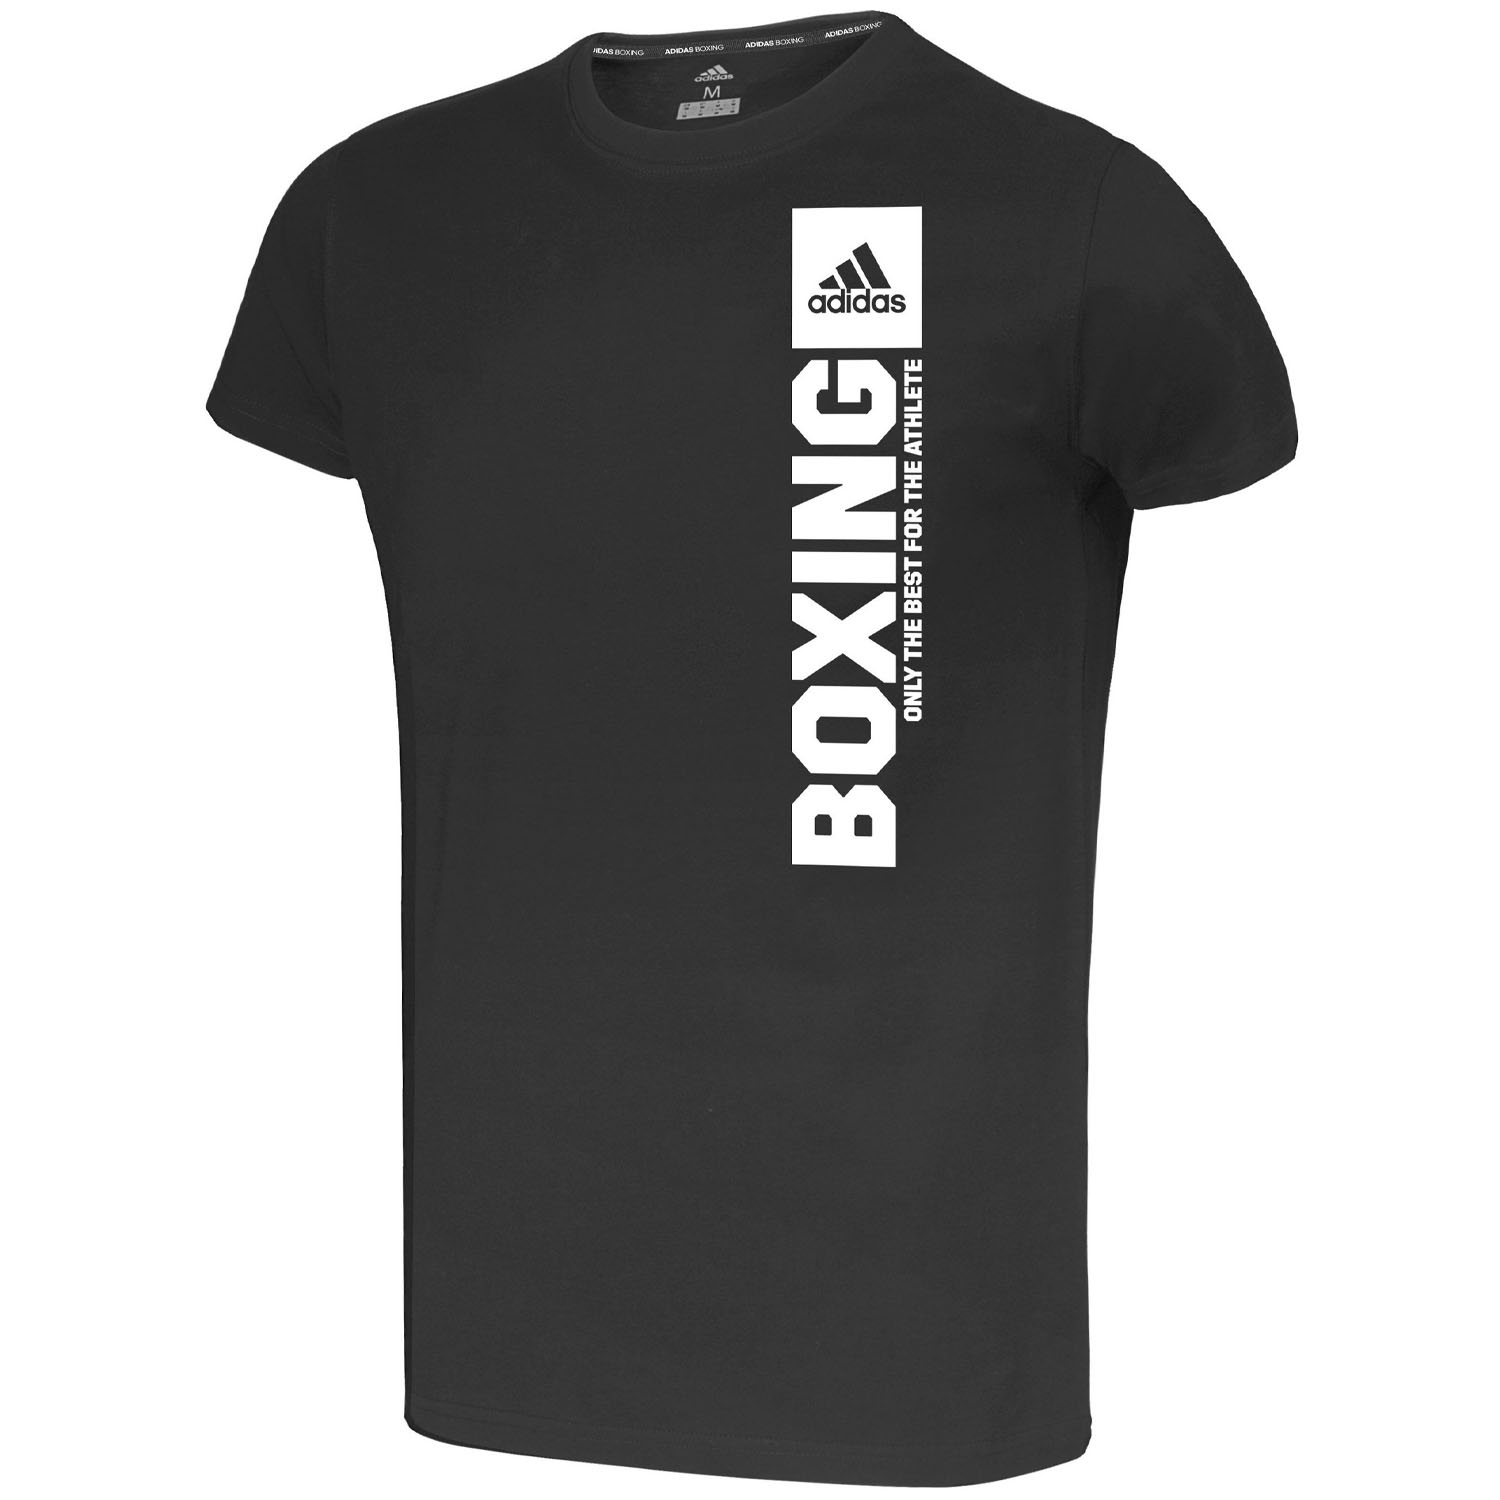 adidas T-Shirt, Community Vertical Boxing, schwarz, L